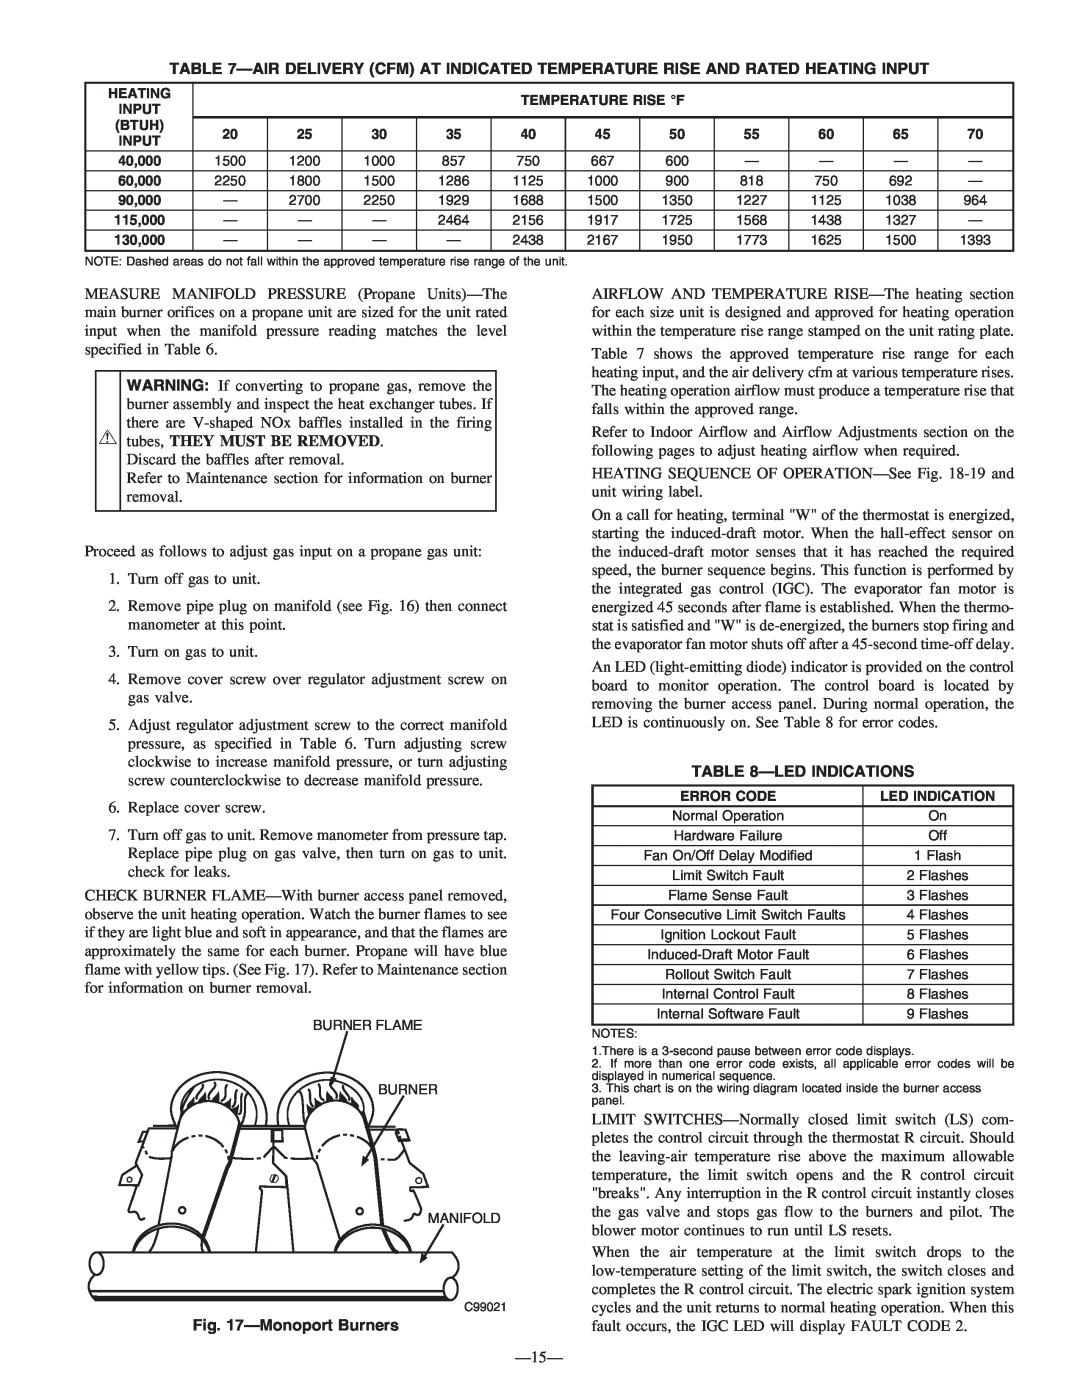 Bryant 583B instruction manual MonoportBurners, Ledindications 